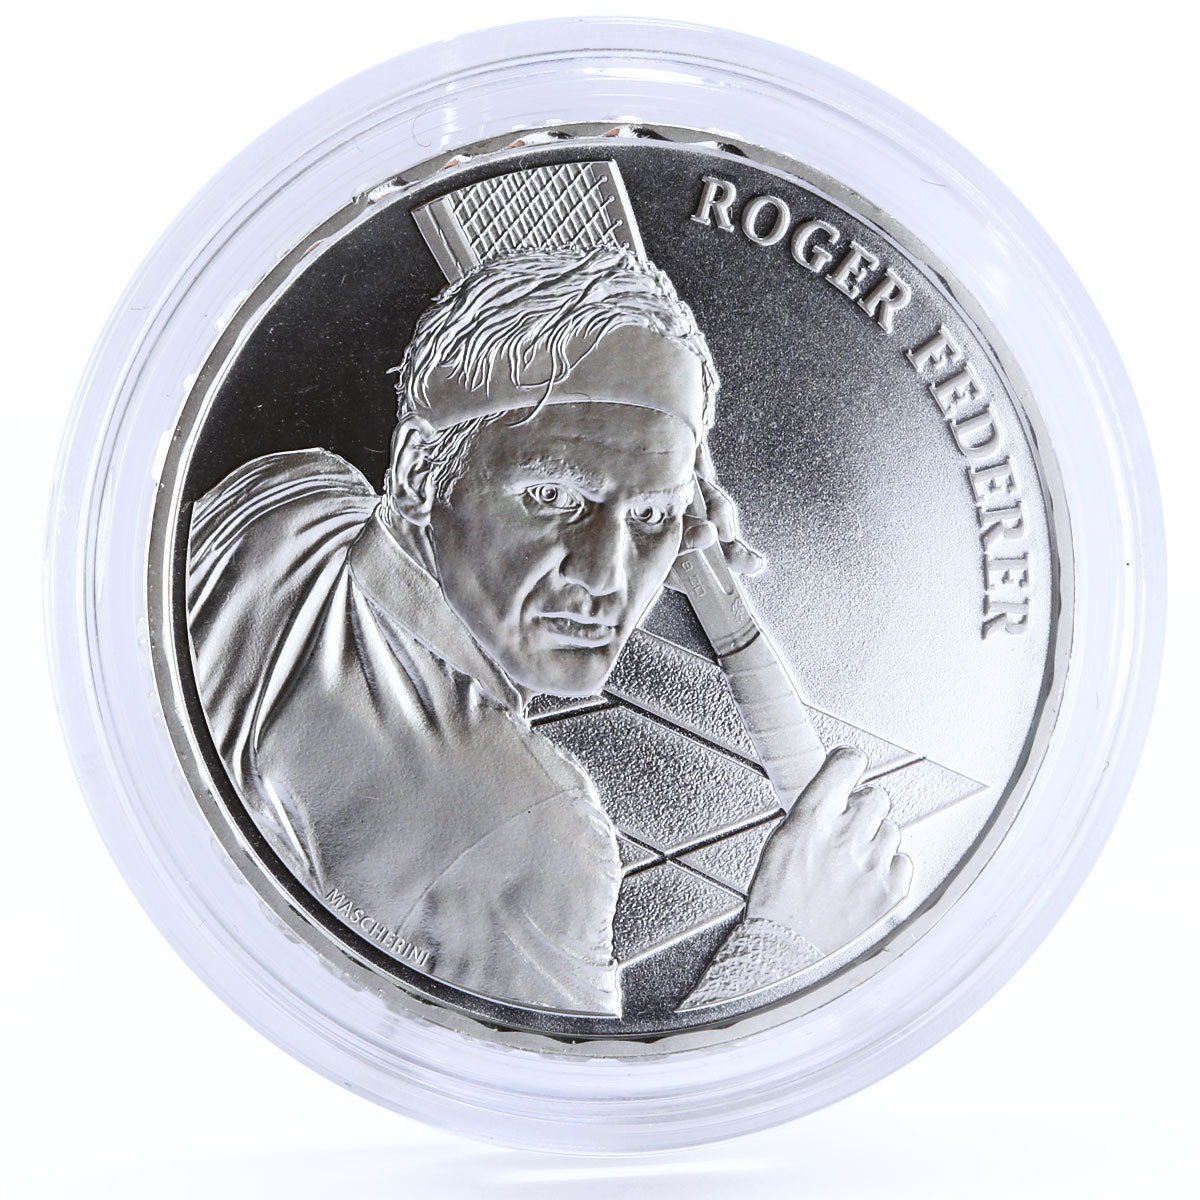 Switzerland 20 francs Tennisist Roger Federer Sports Legend silver coin 2020